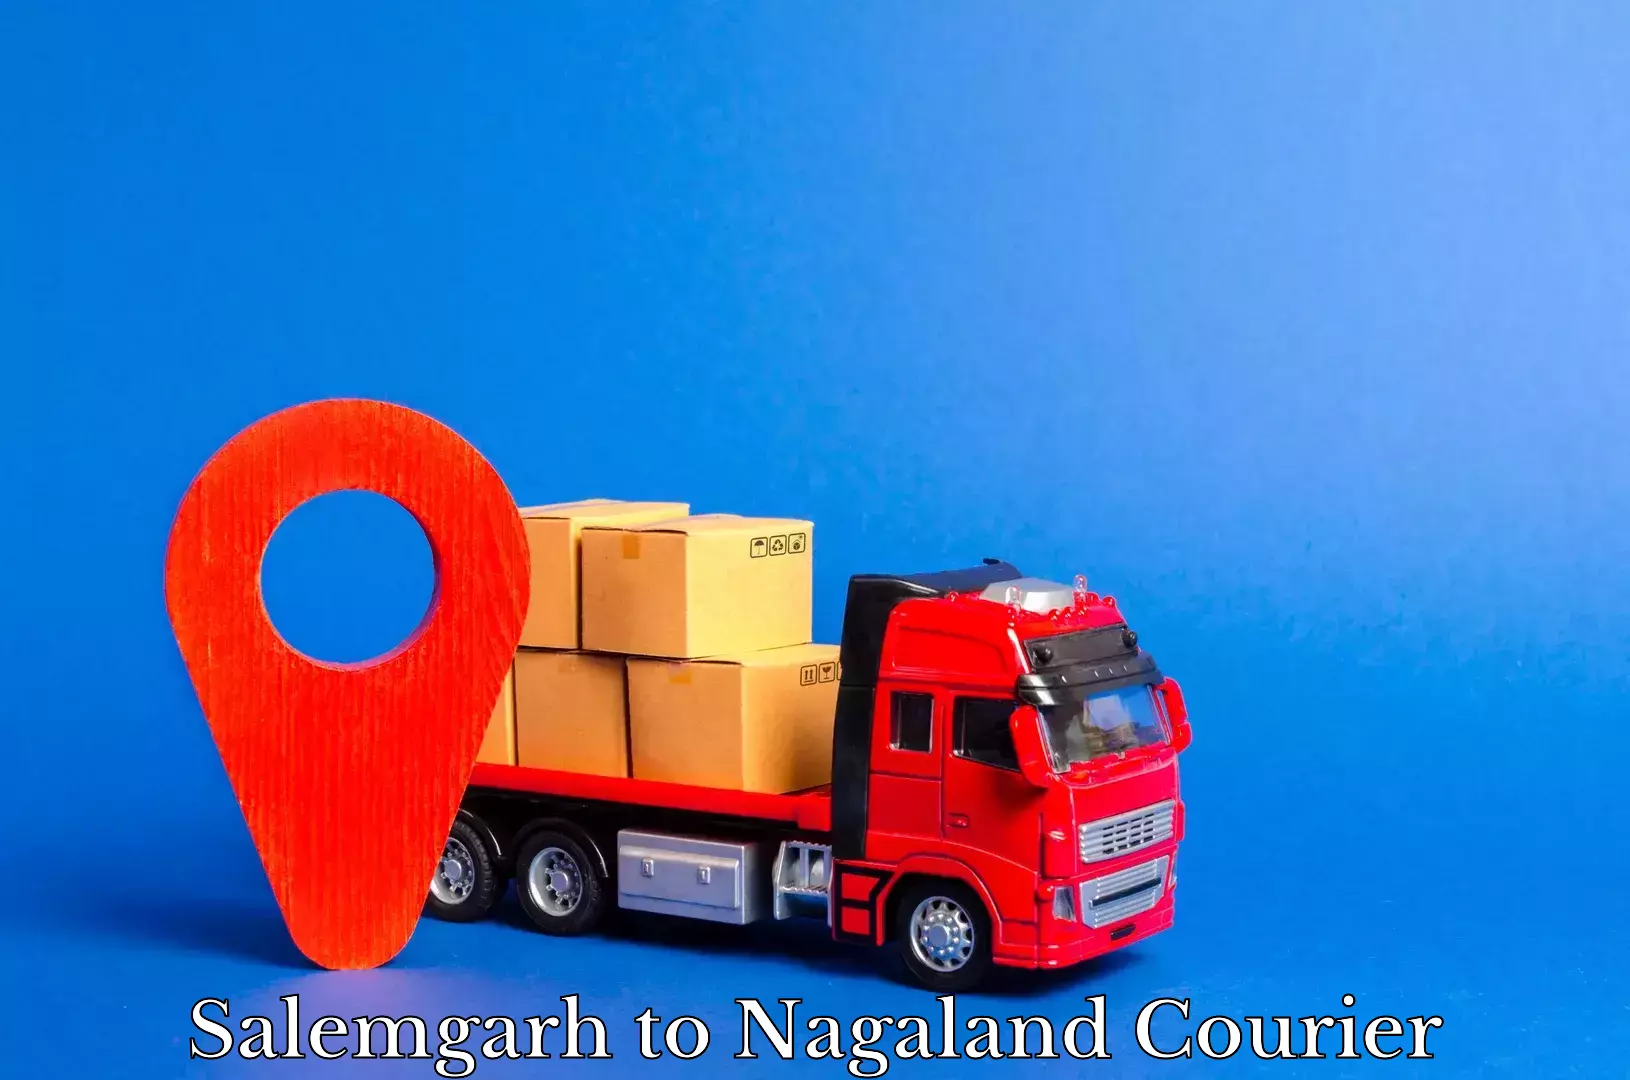 Modern courier technology Salemgarh to Nagaland